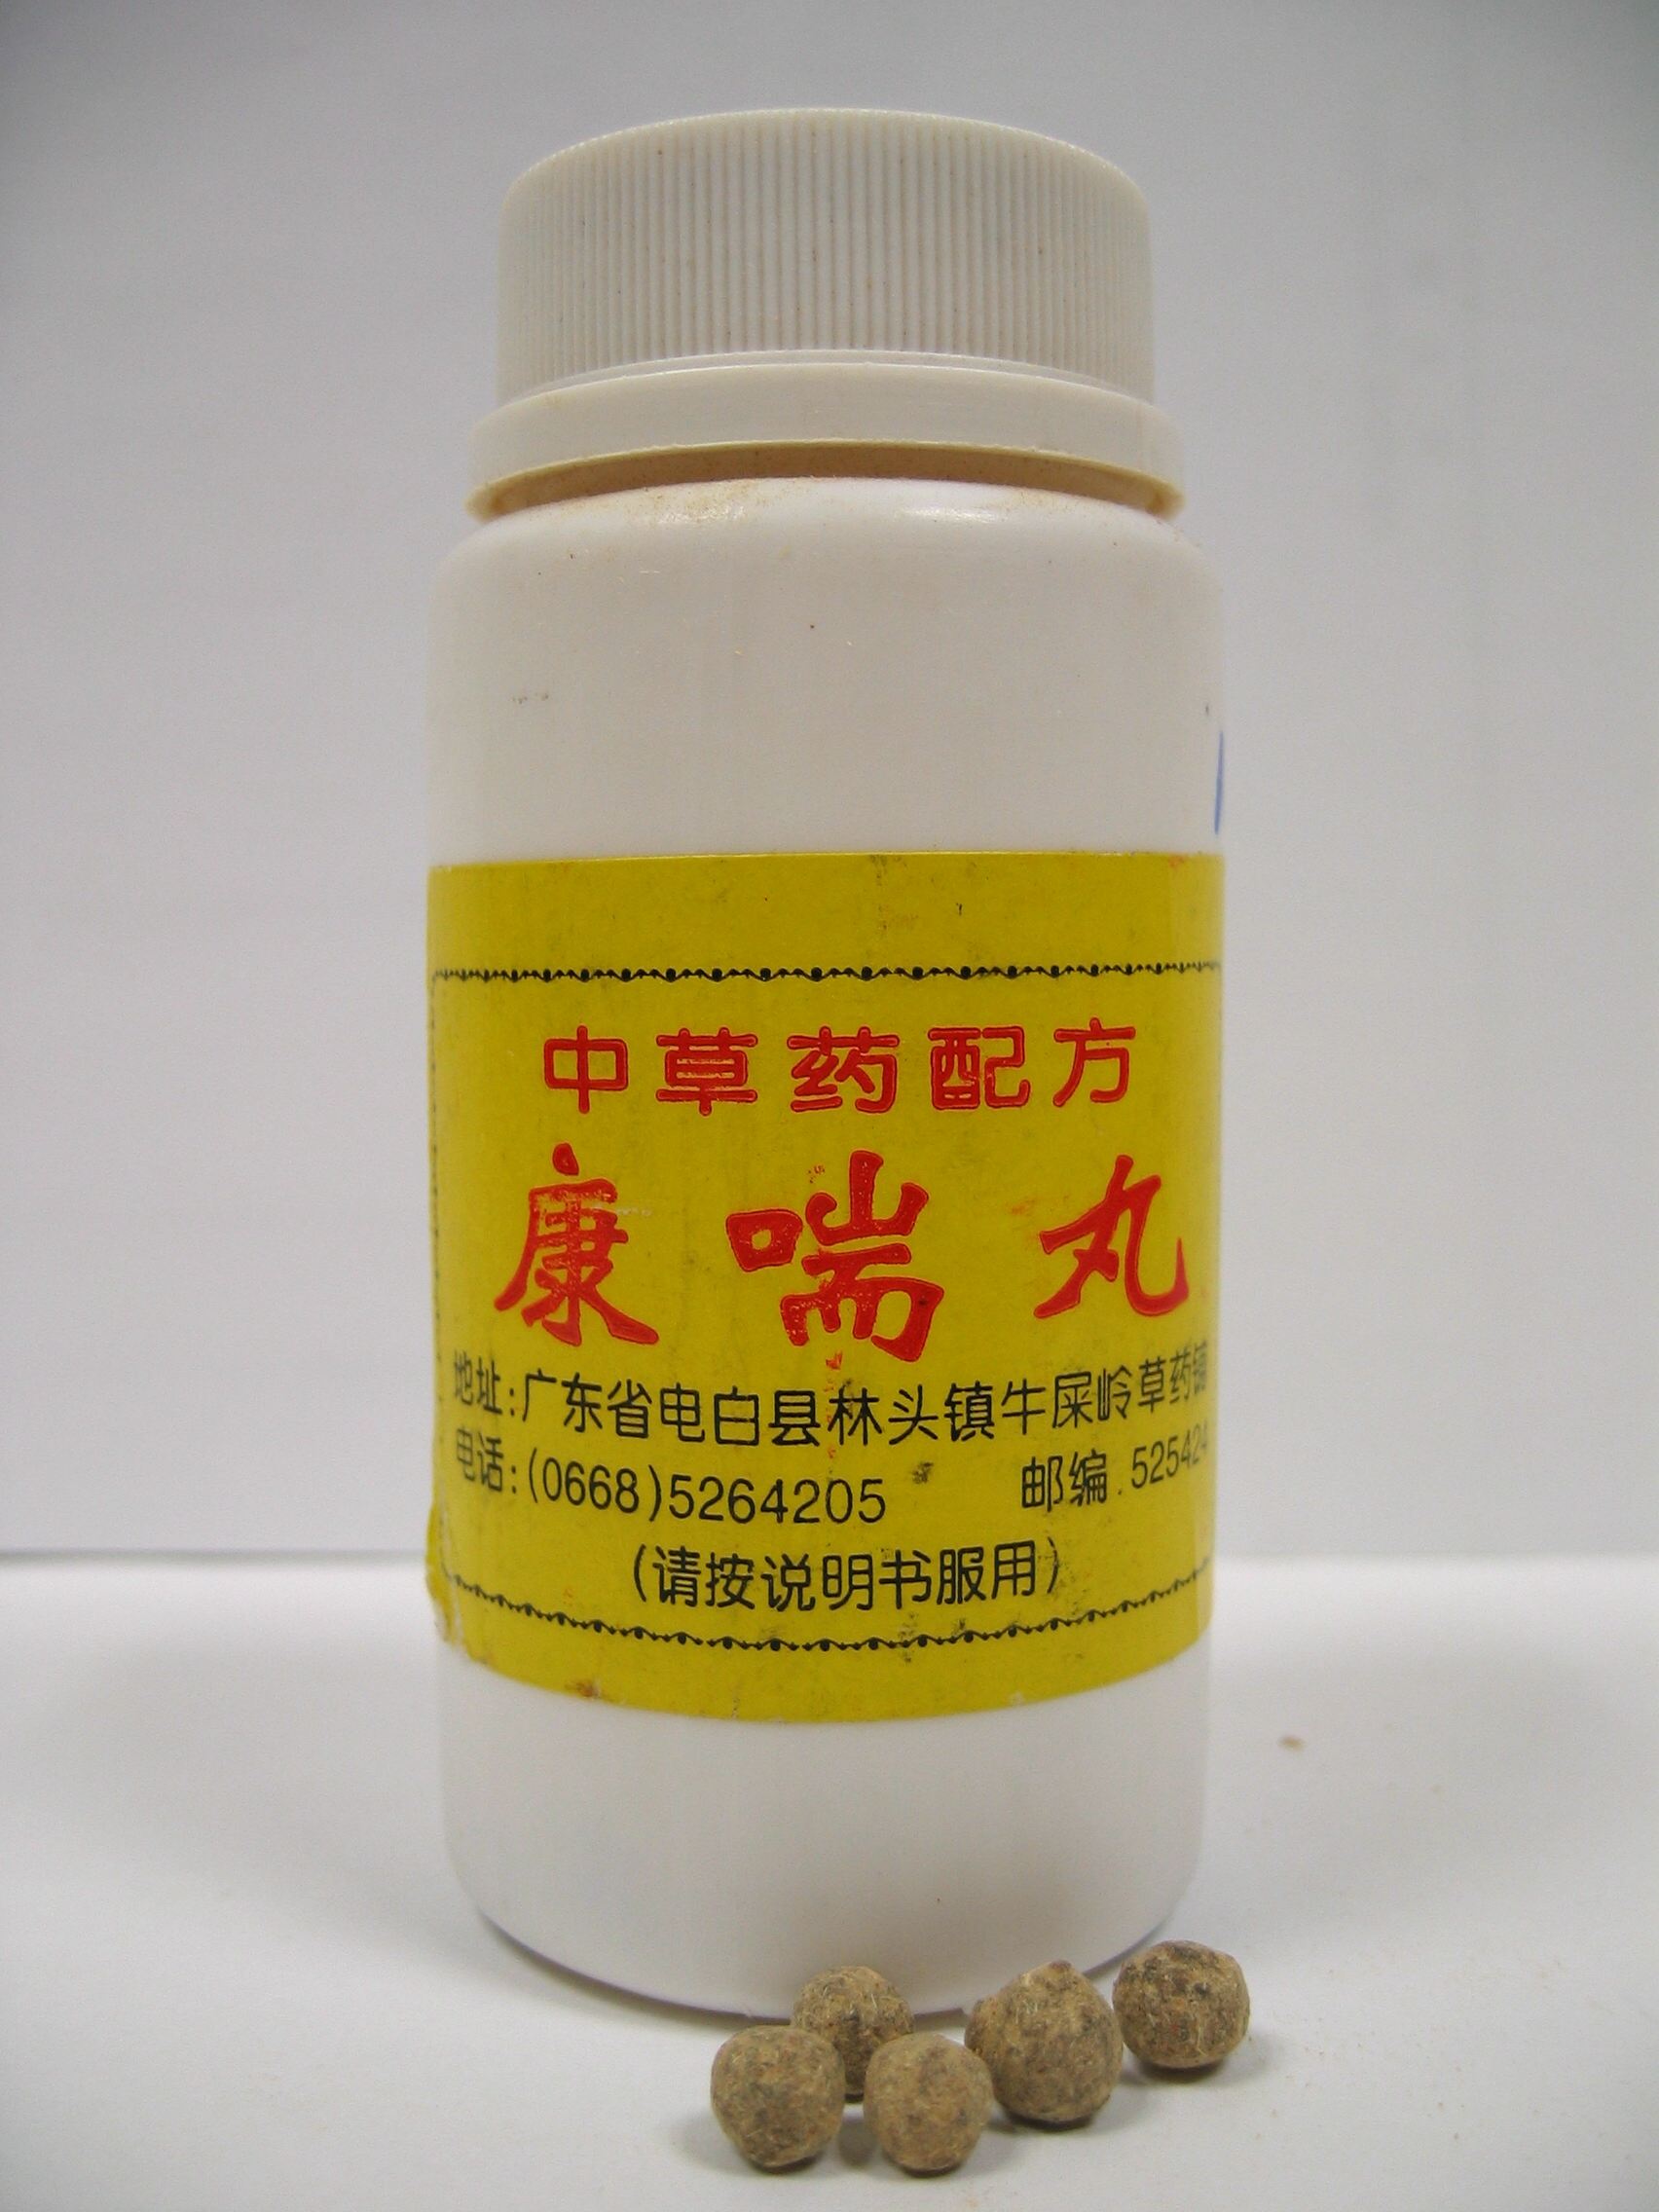 Proprietary Chinese medicine with western drug ingredients found